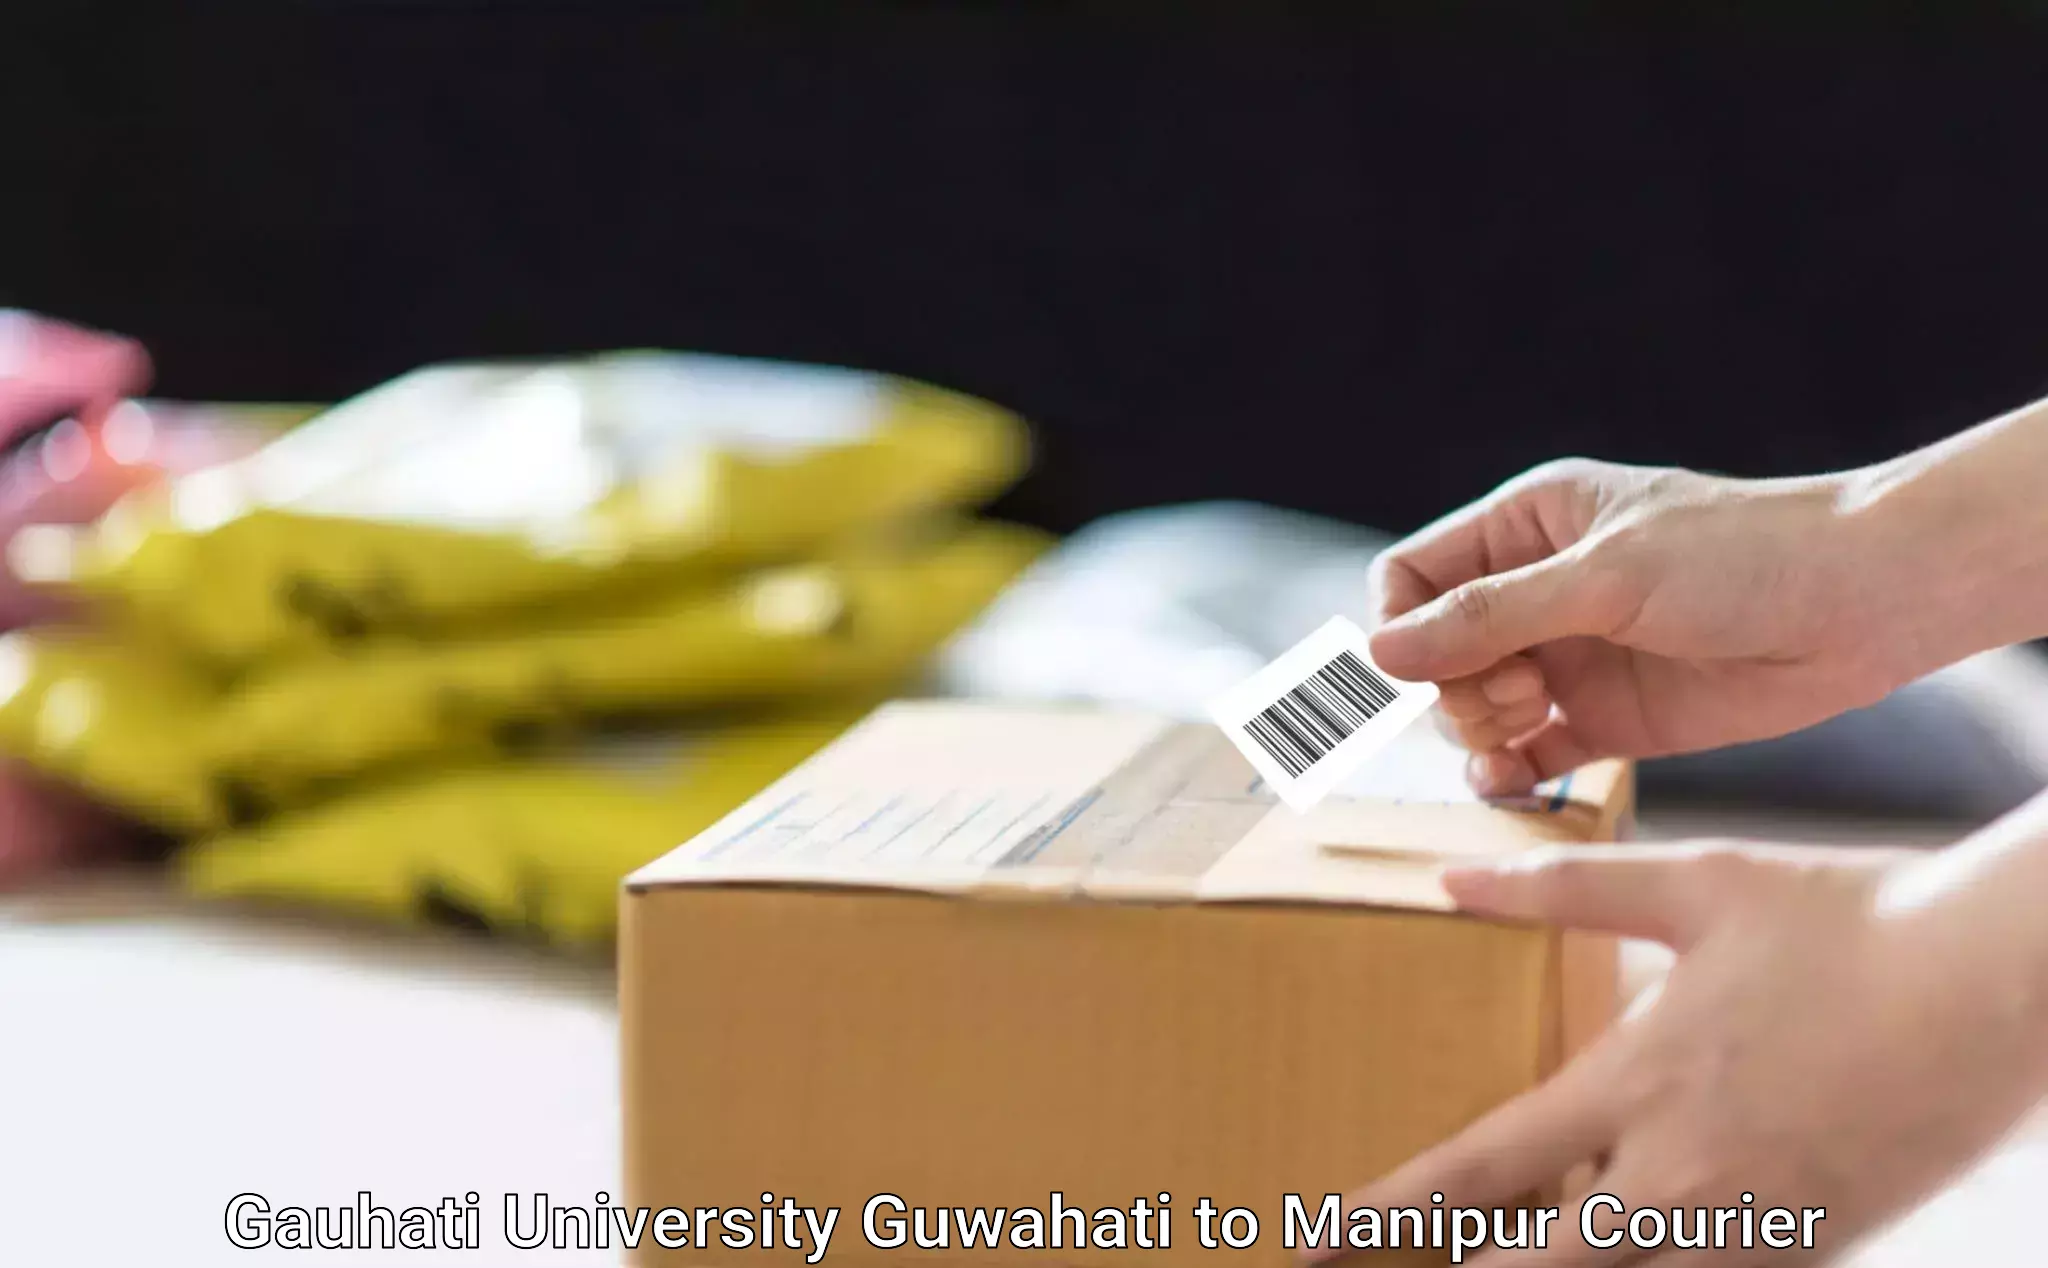 Budget-friendly shipping Gauhati University Guwahati to Manipur